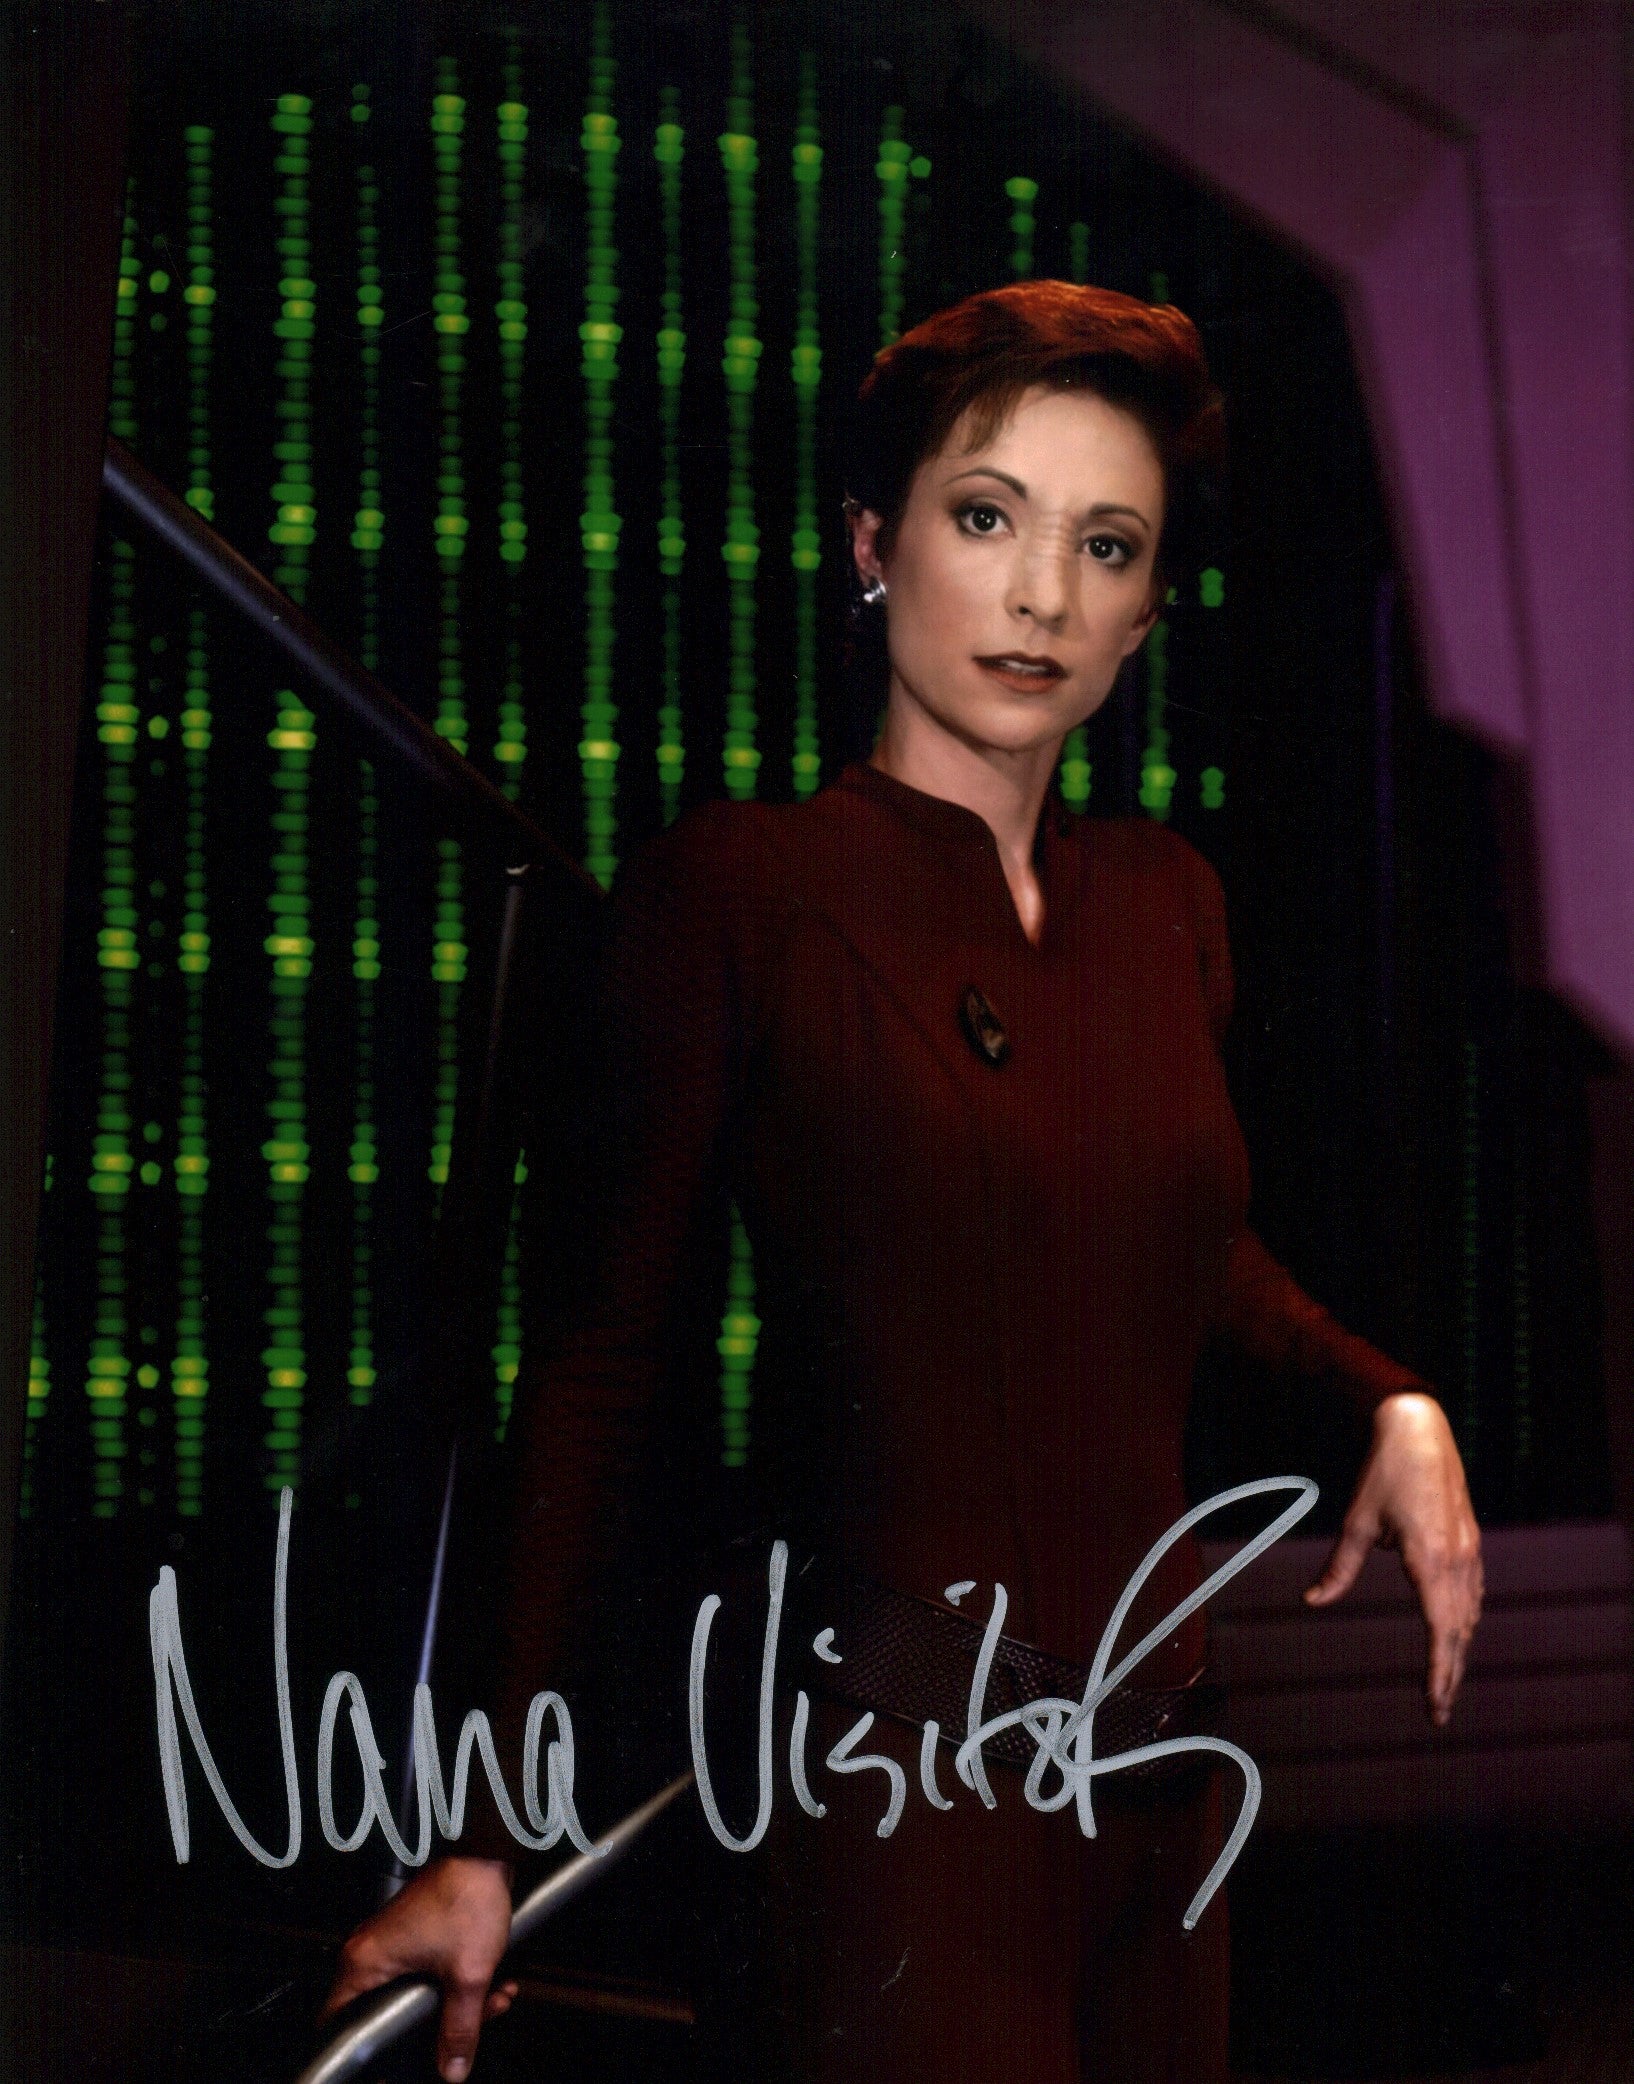 Nana Visitor Star Trek: DS9 11x14 Signed Photo Poster JSA Certified Autograph